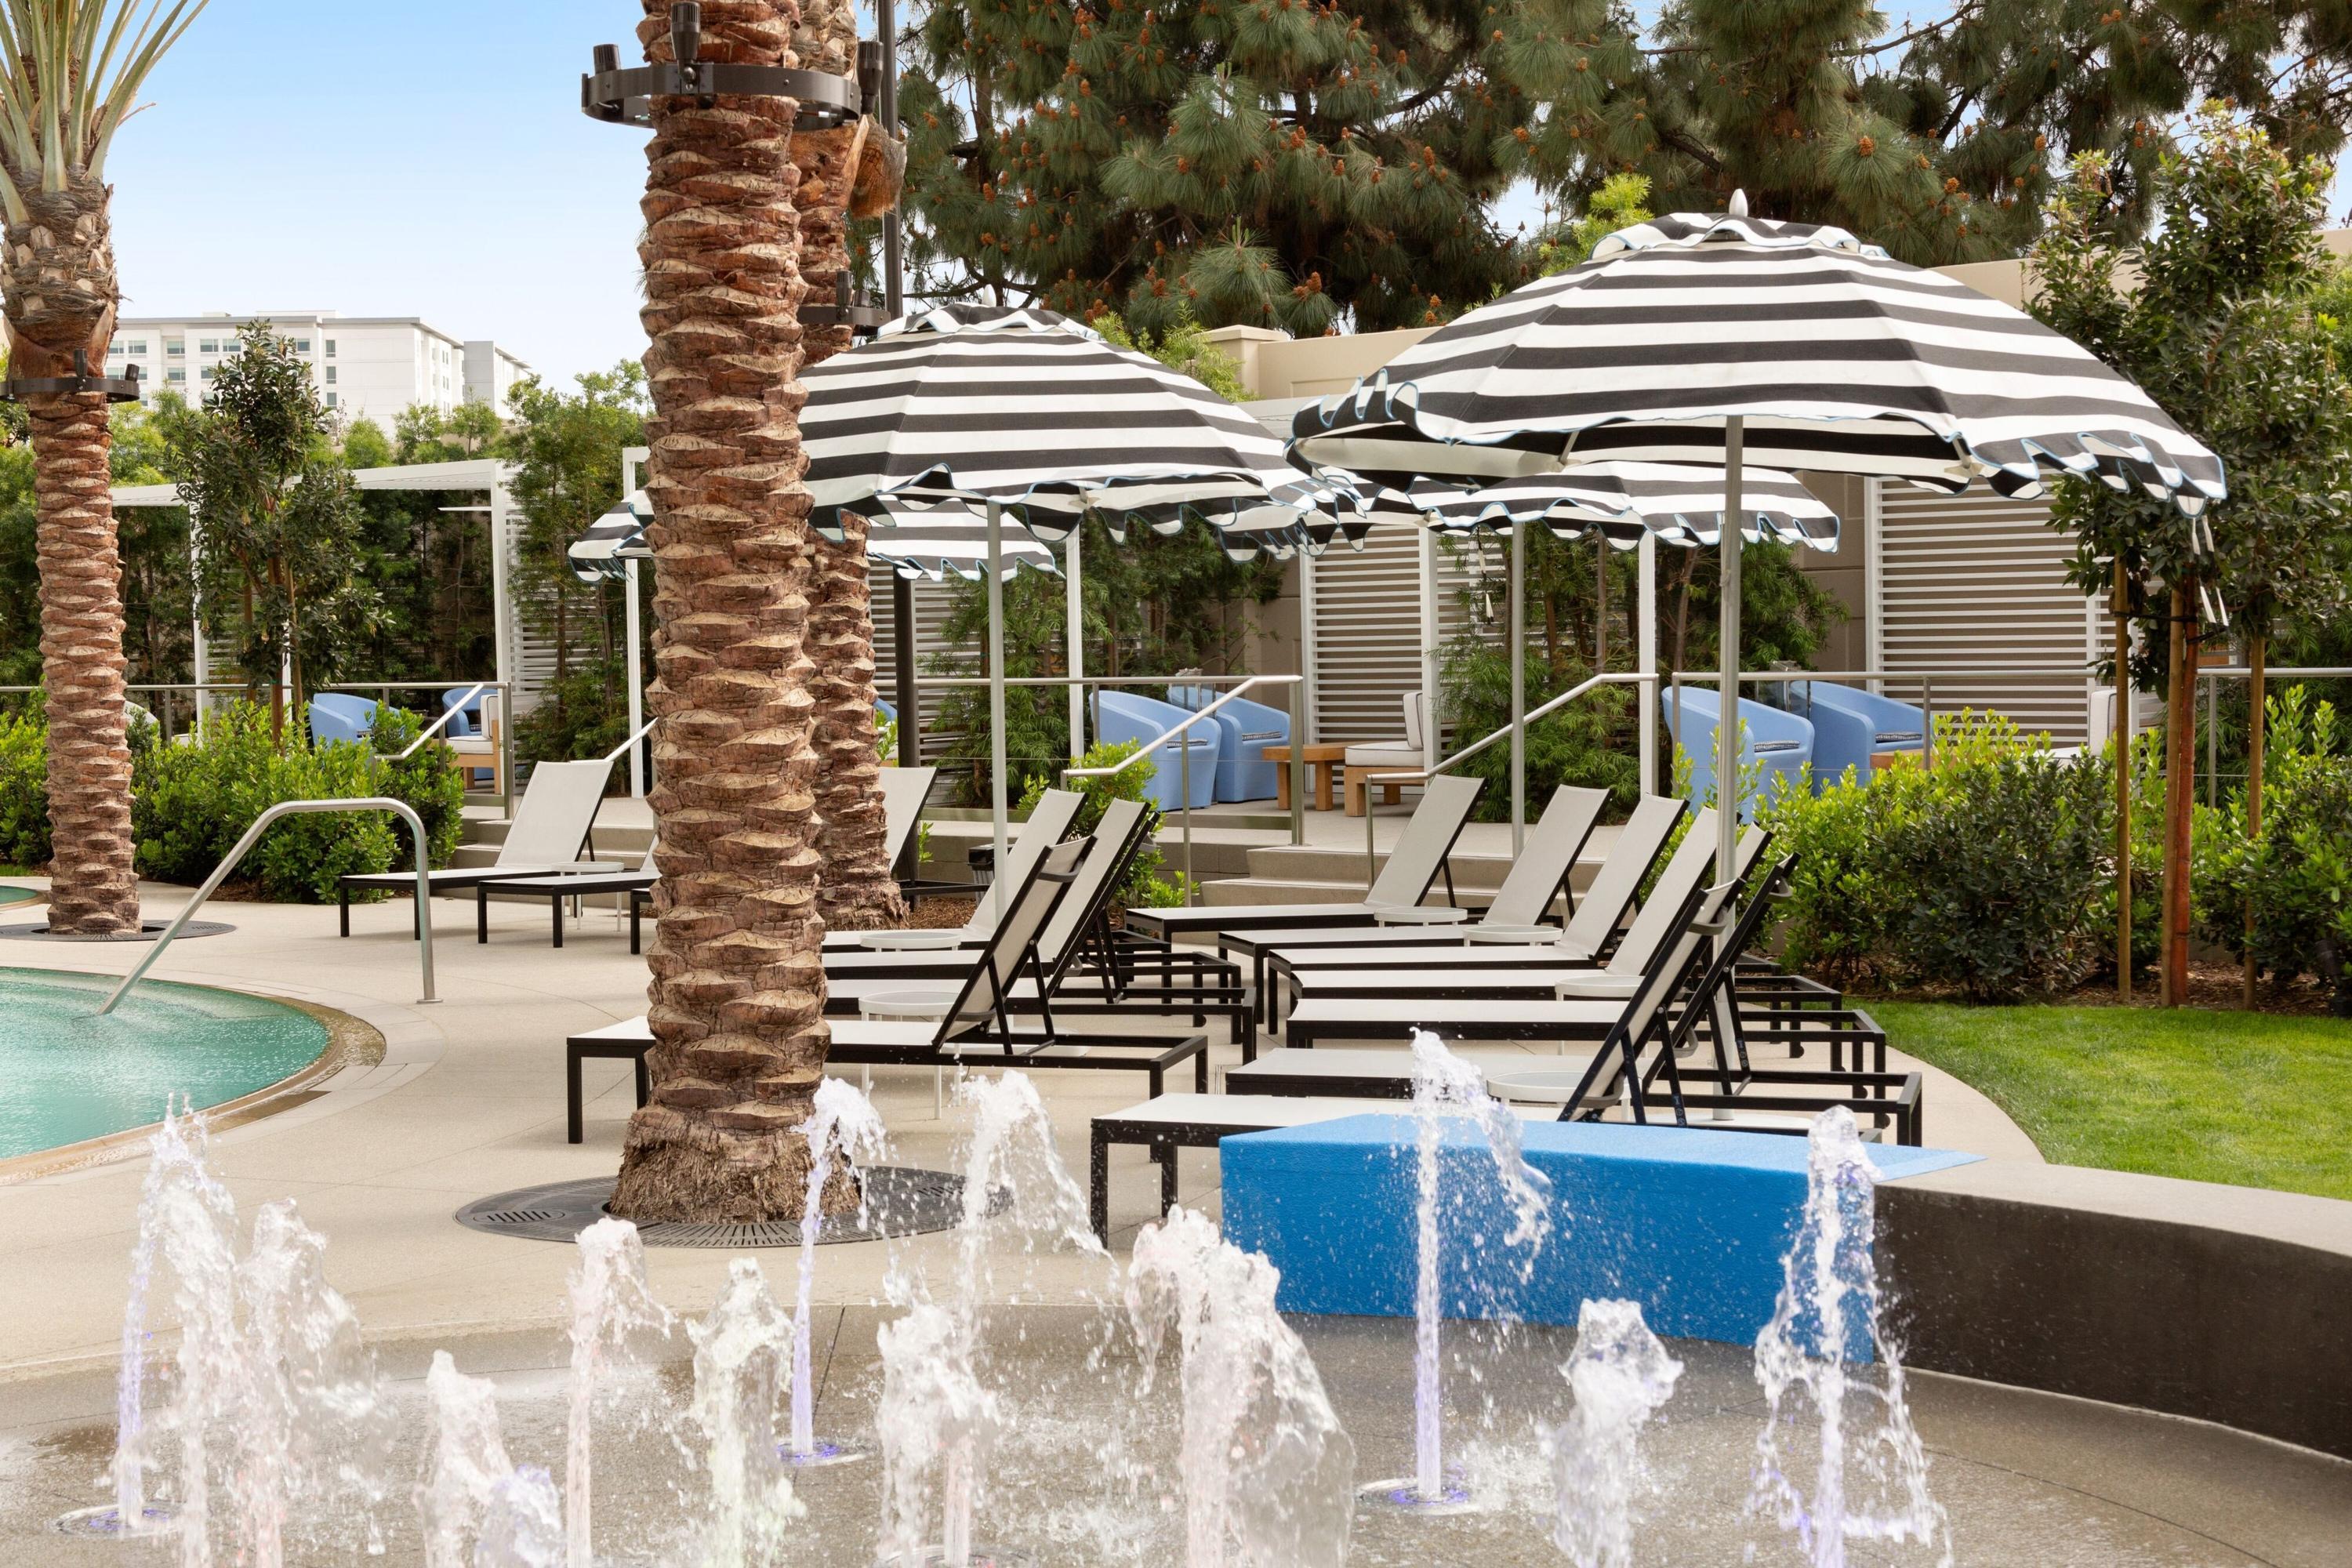 The Viv Hotel Anaheim, Tribute Portfolio- First Class Anaheim, CA